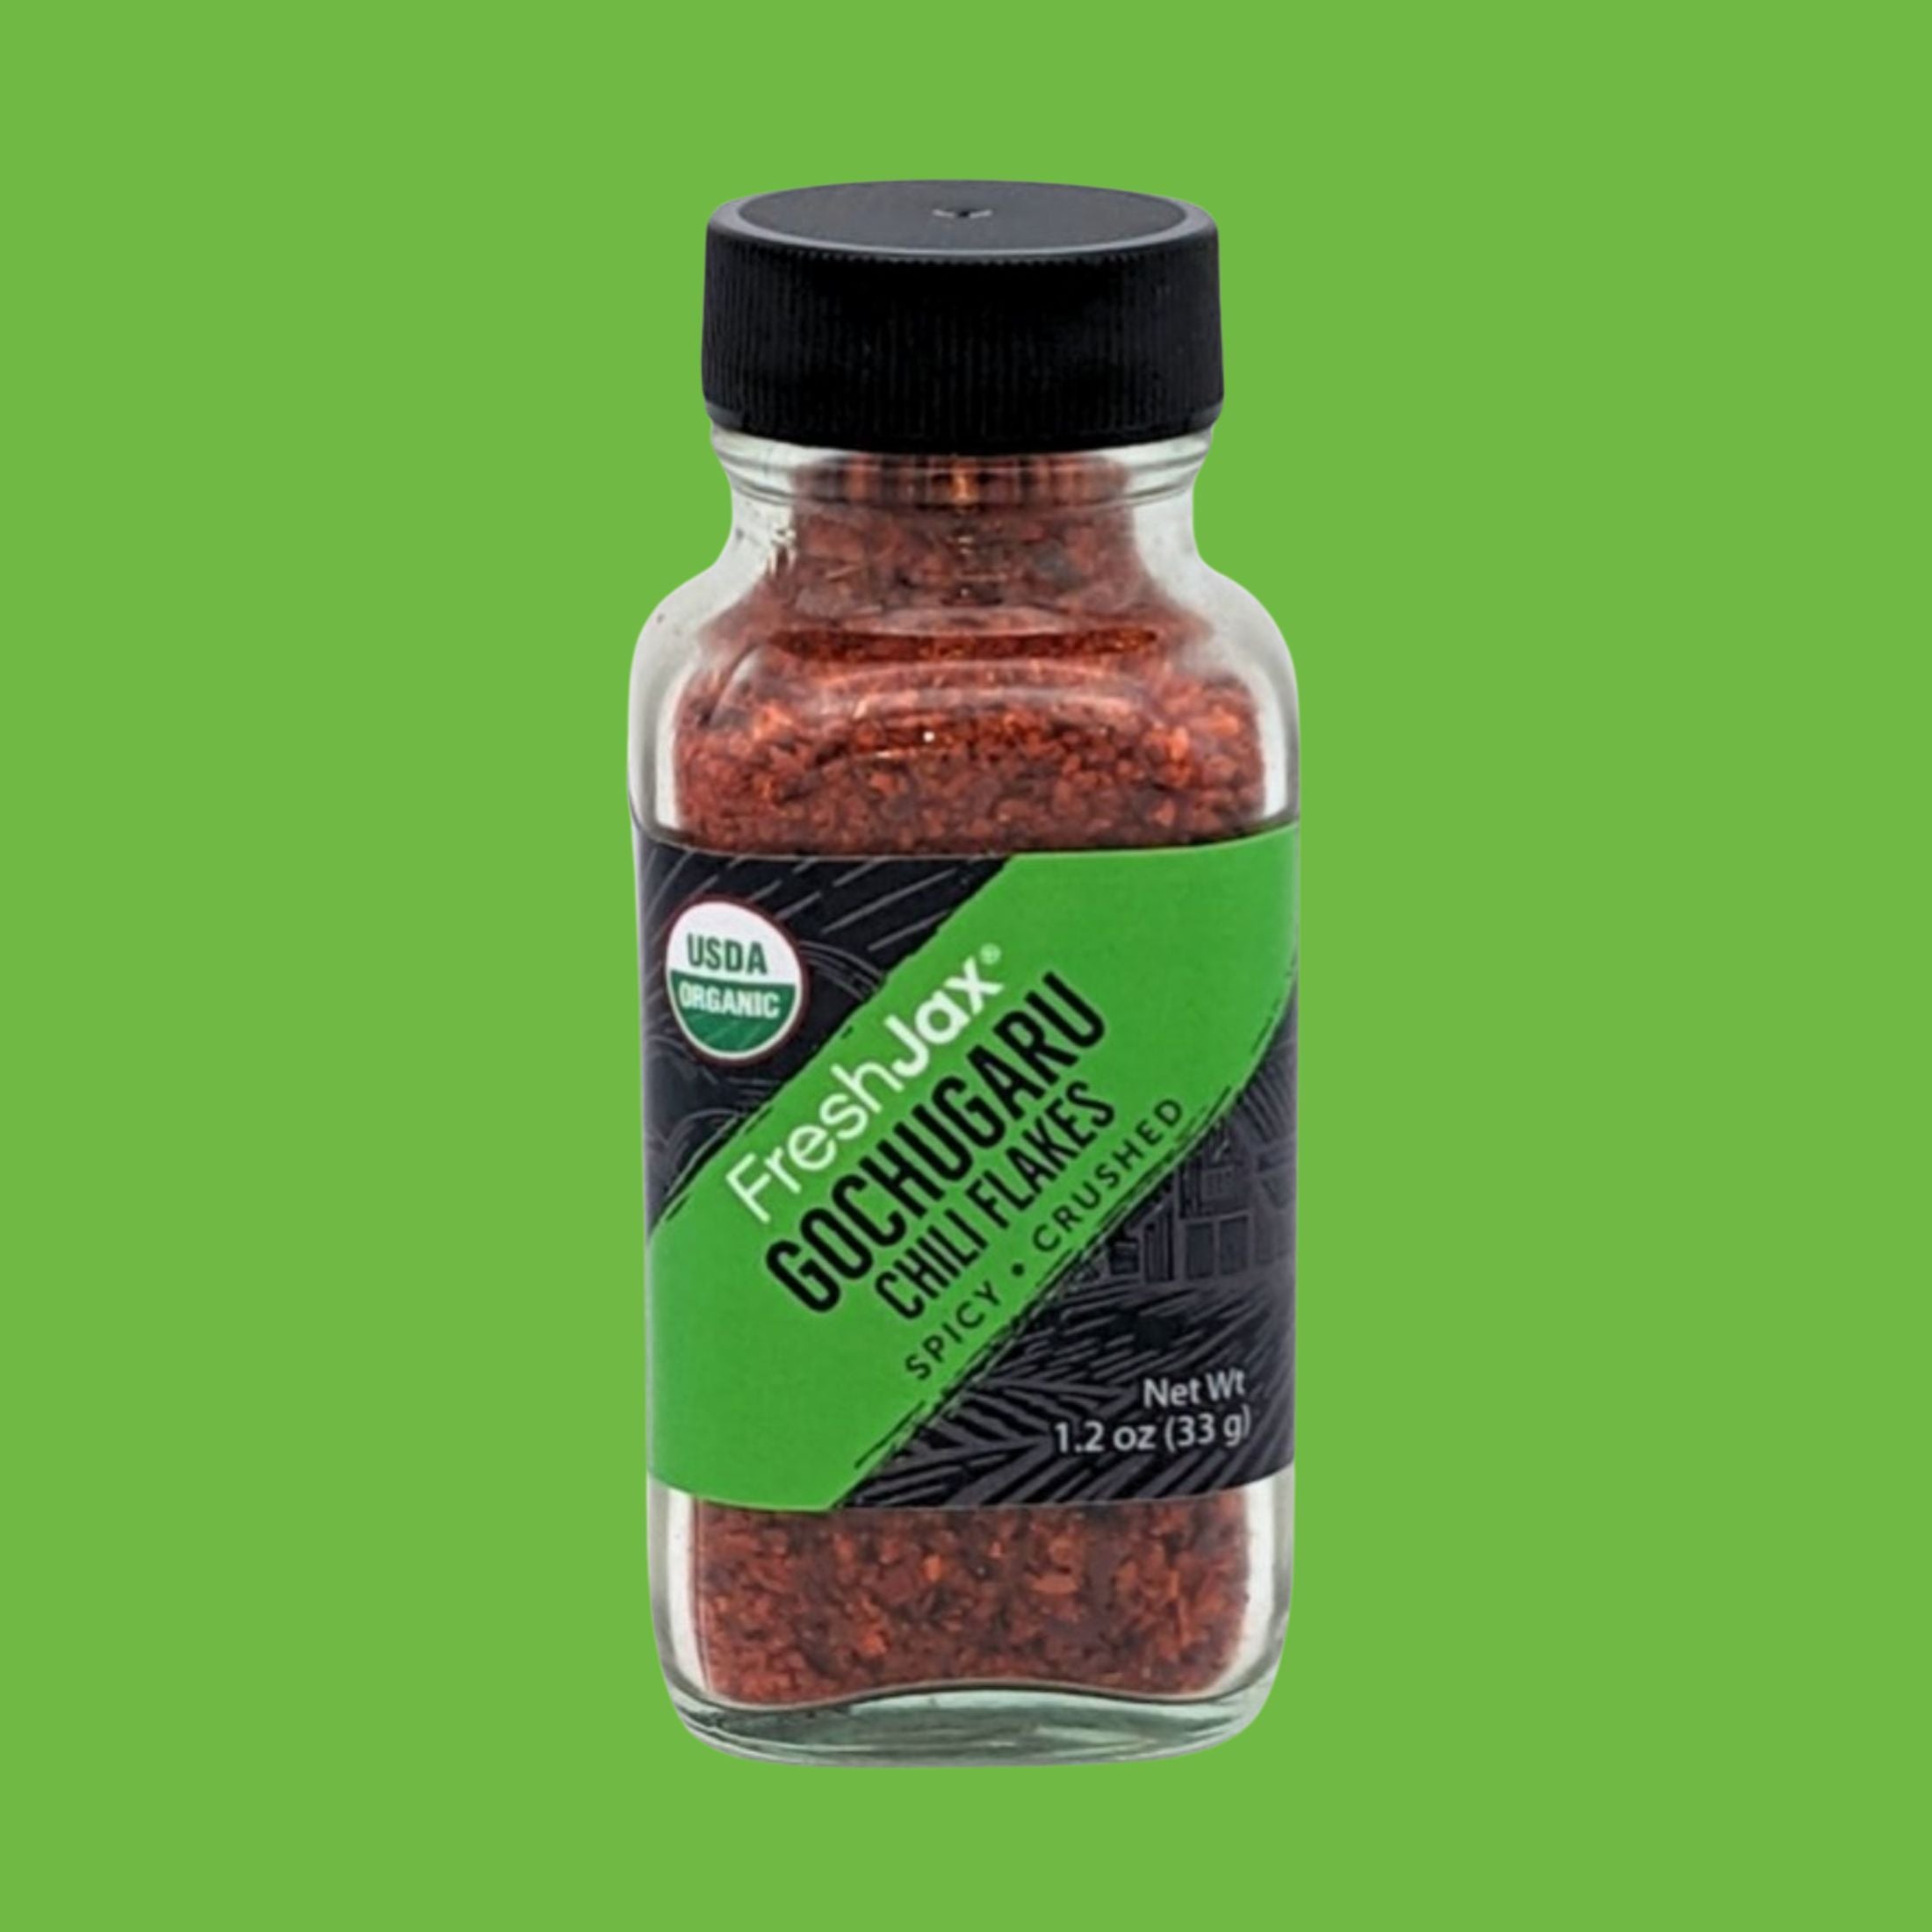 FreshJax Organic Spices Gochugaru Chili Flakes Sampler